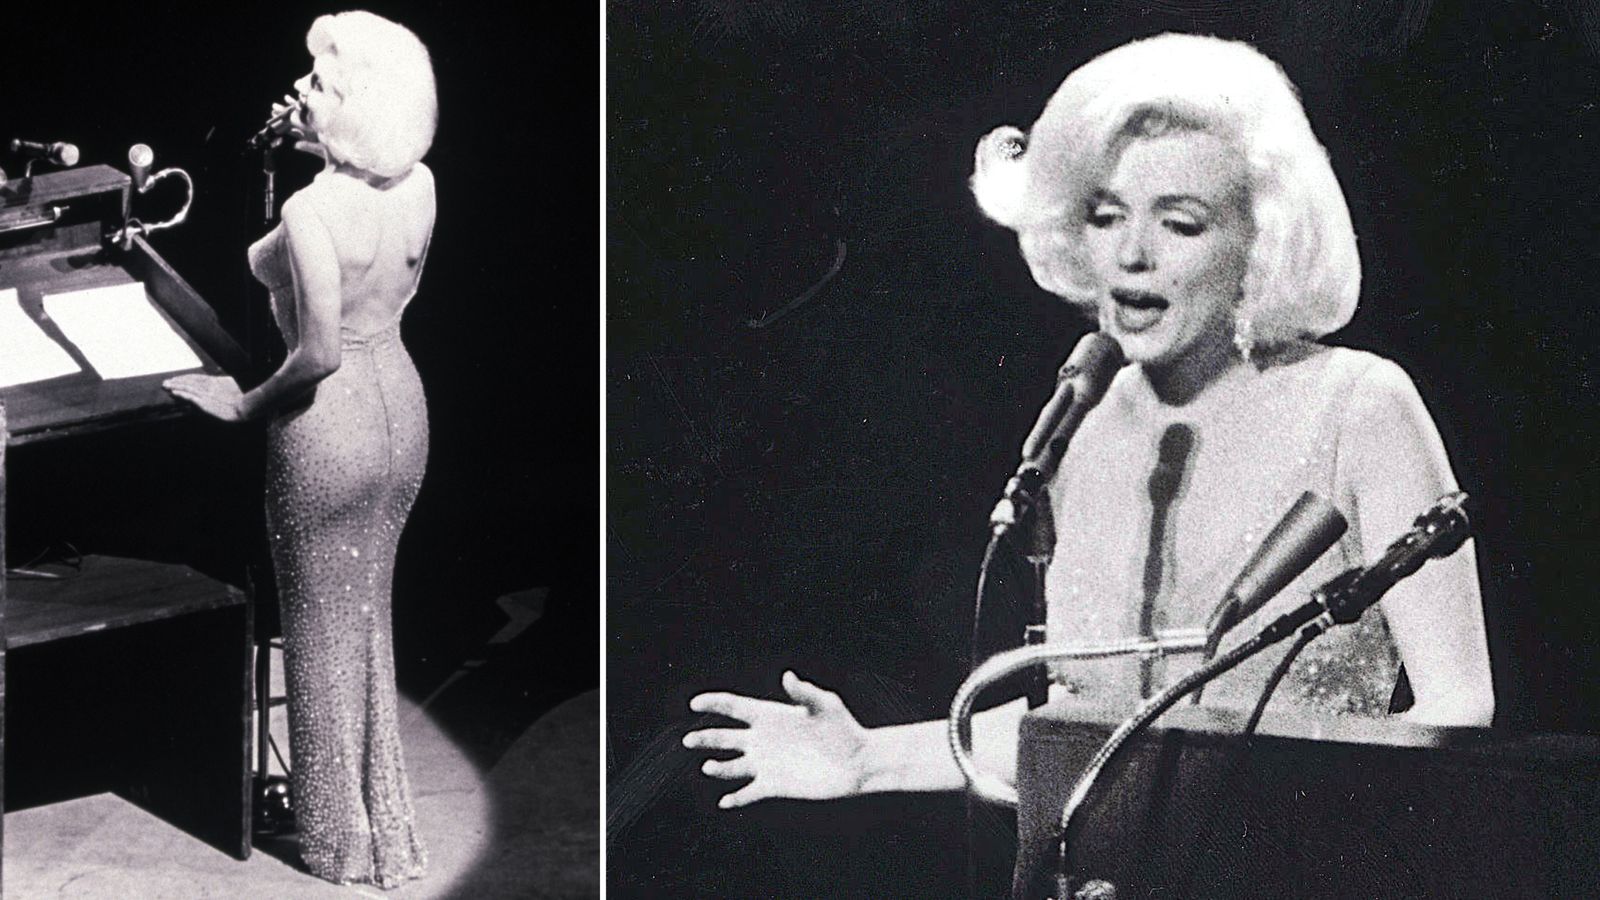 Marilyn Monroe's Happy Birthday dress sold for $4.8m